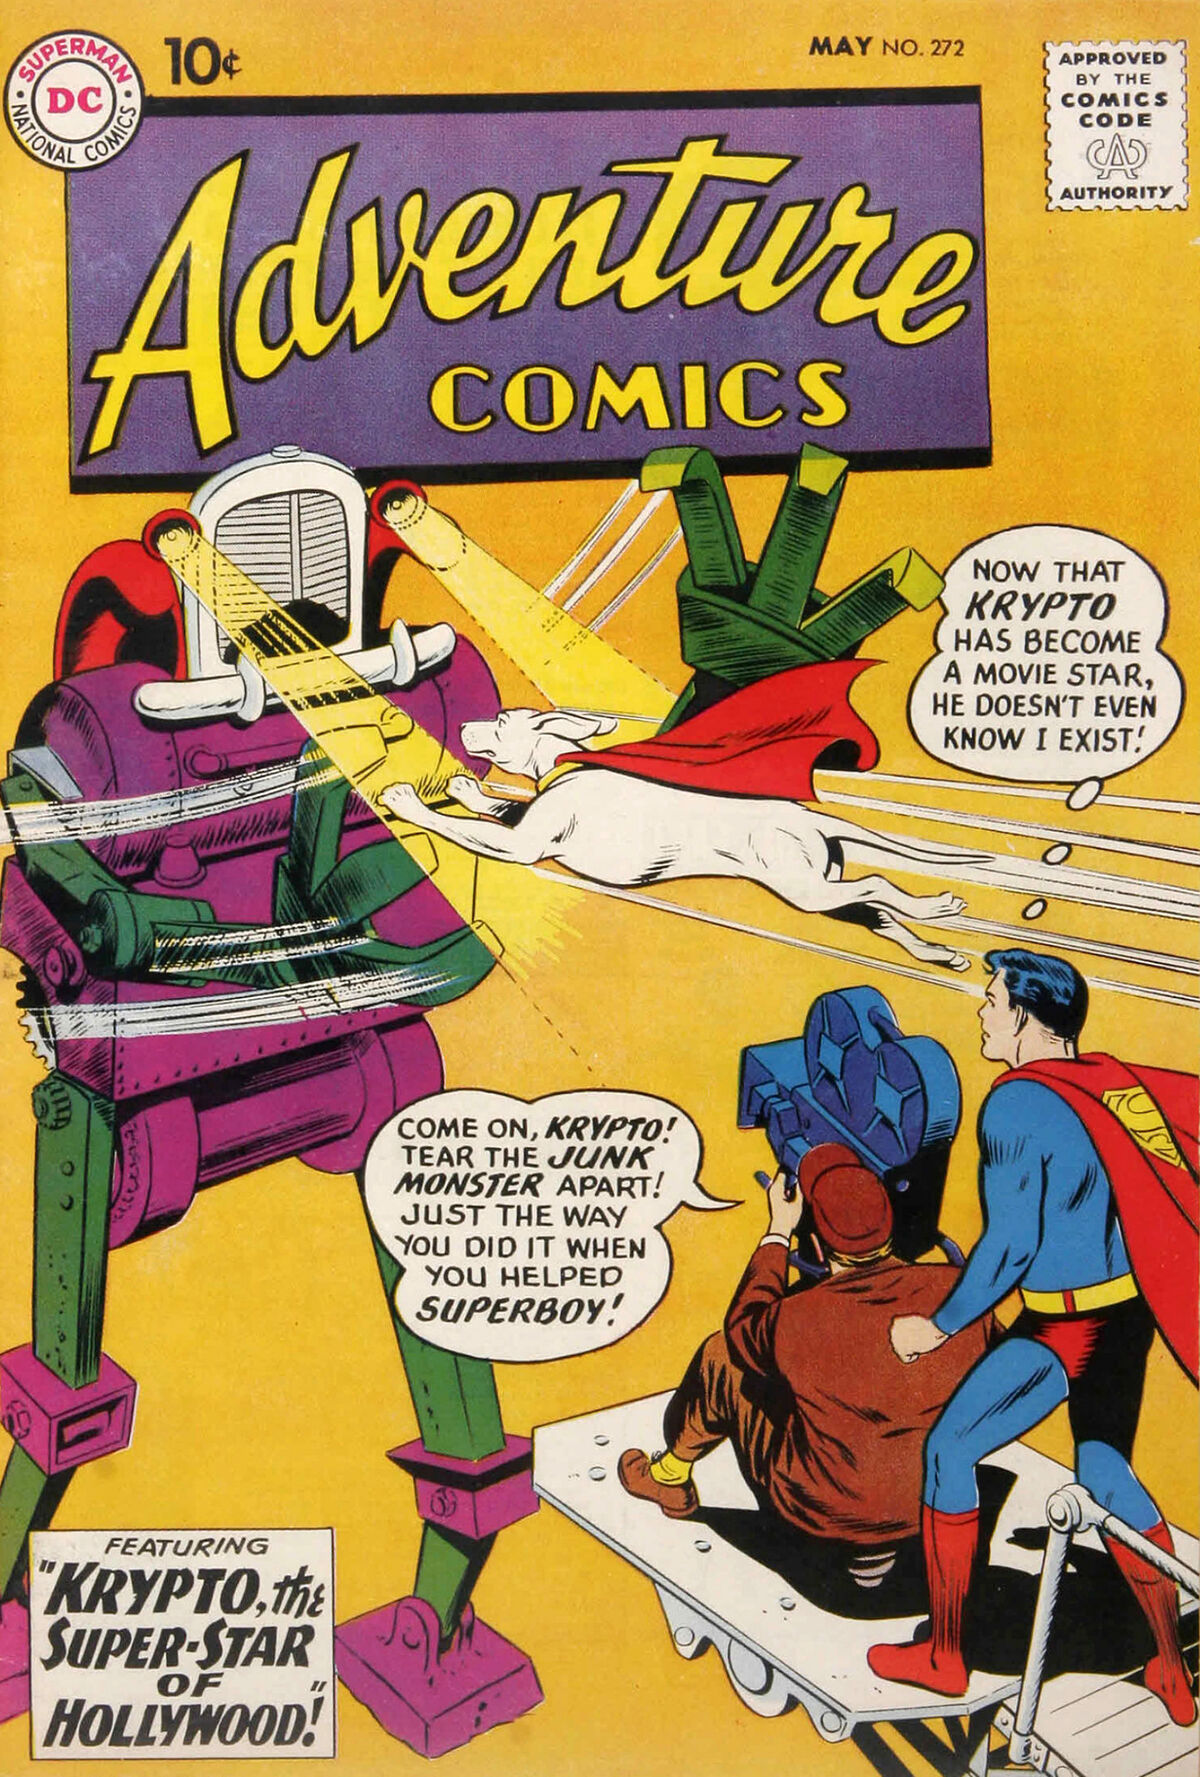 Adventure Comics Vol 1 272 | DC Database | Fandom